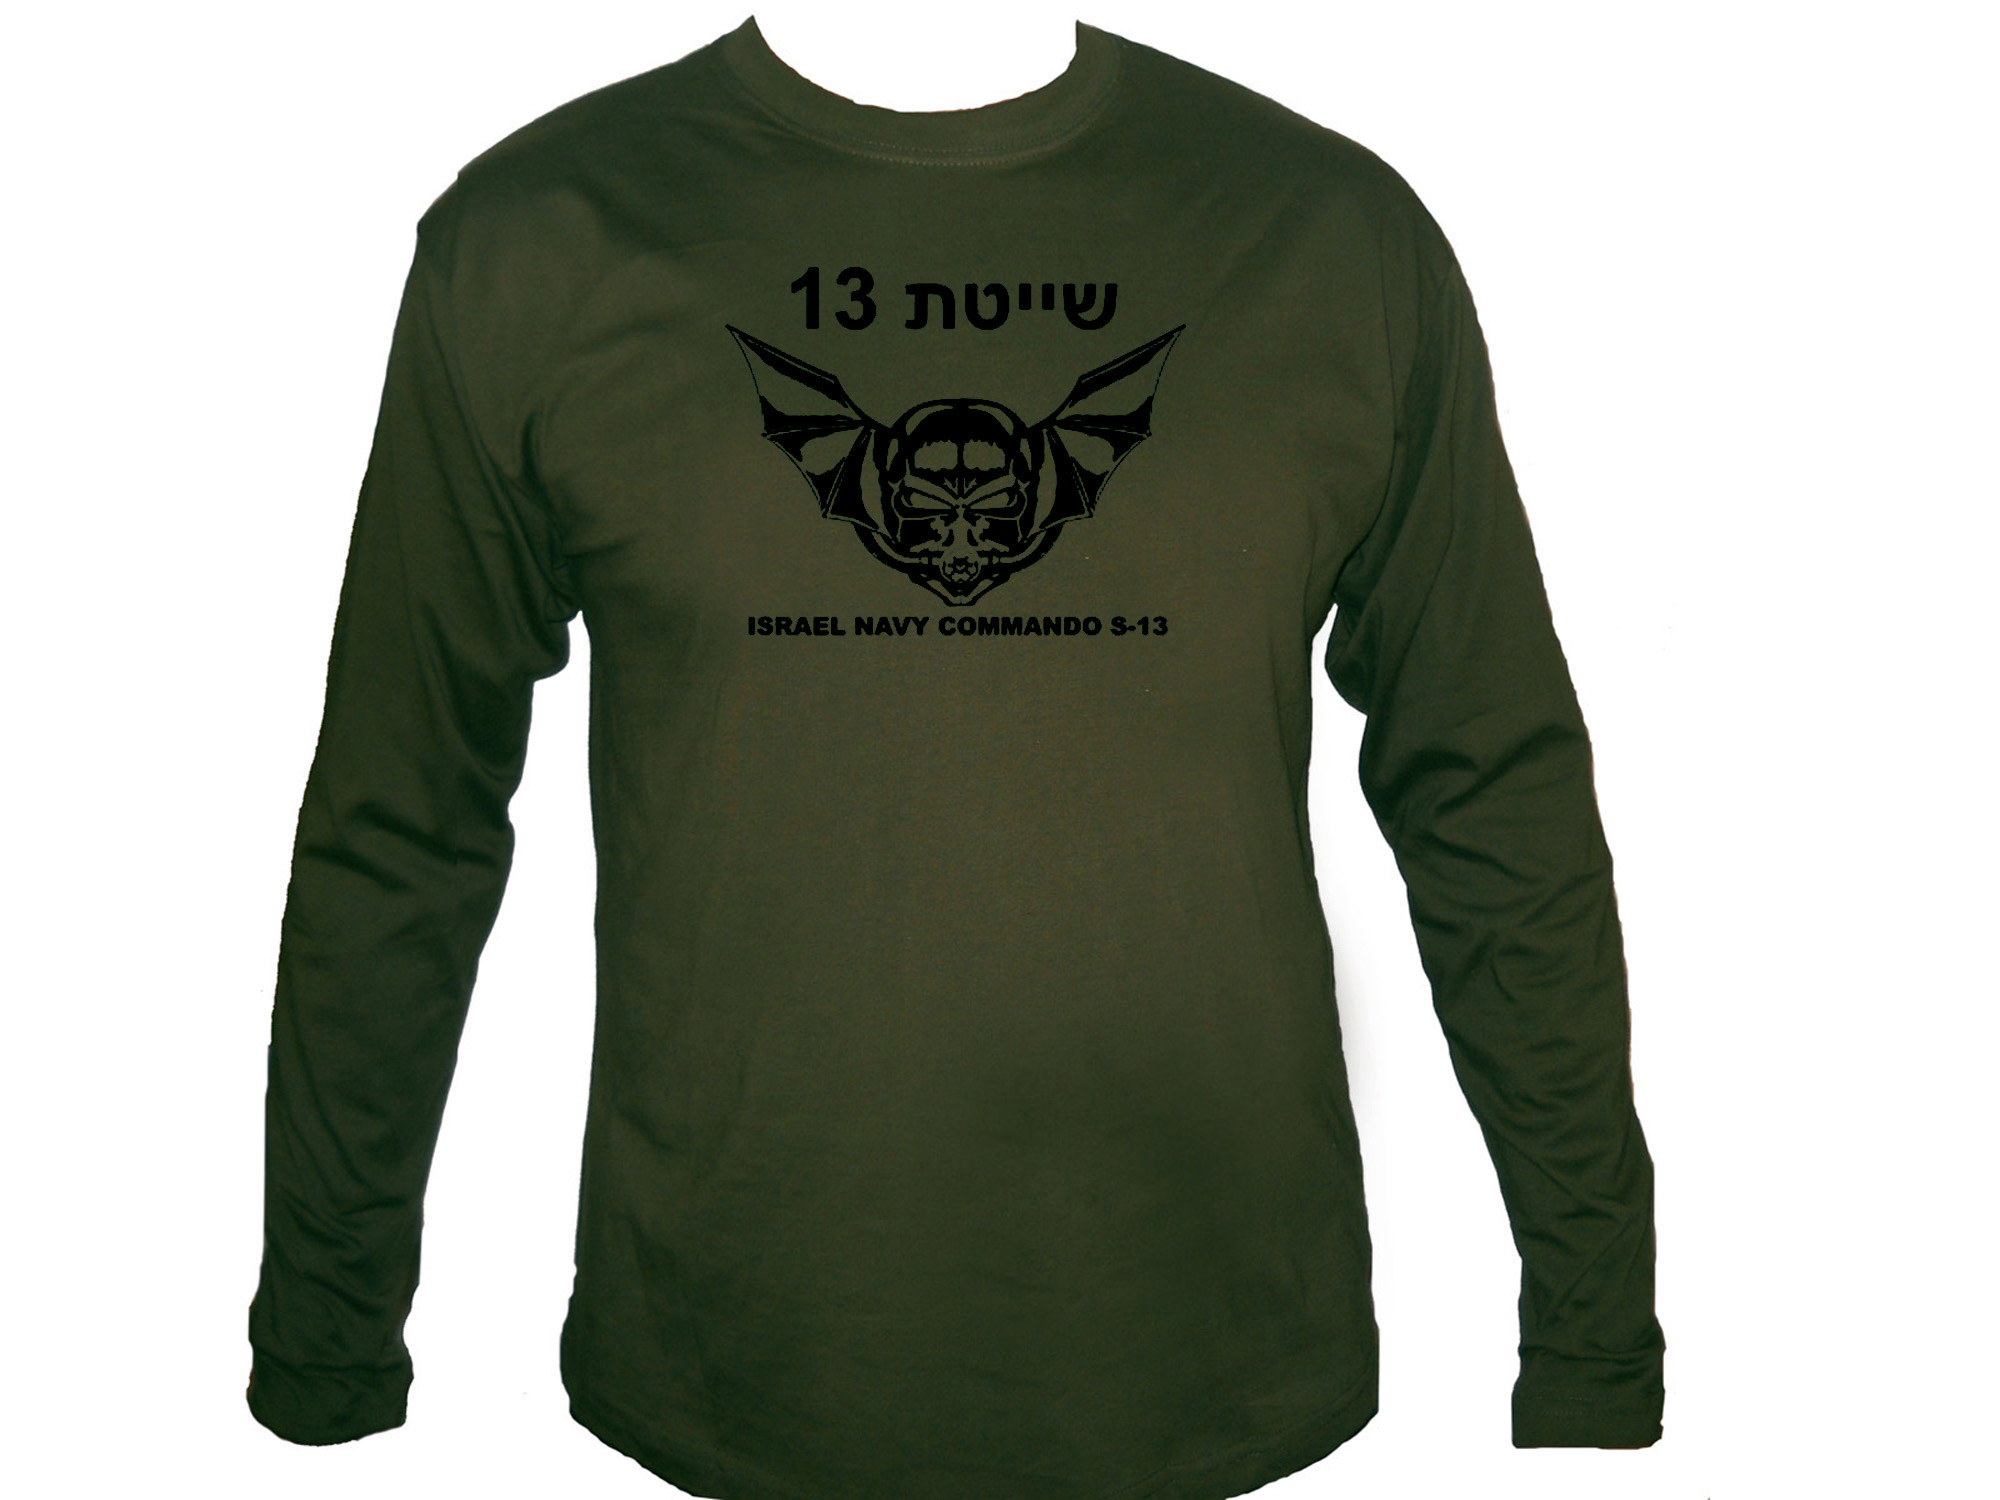 IDF ZAHAL Navy Seals shayetet 13 sleeved olive green t-shirt